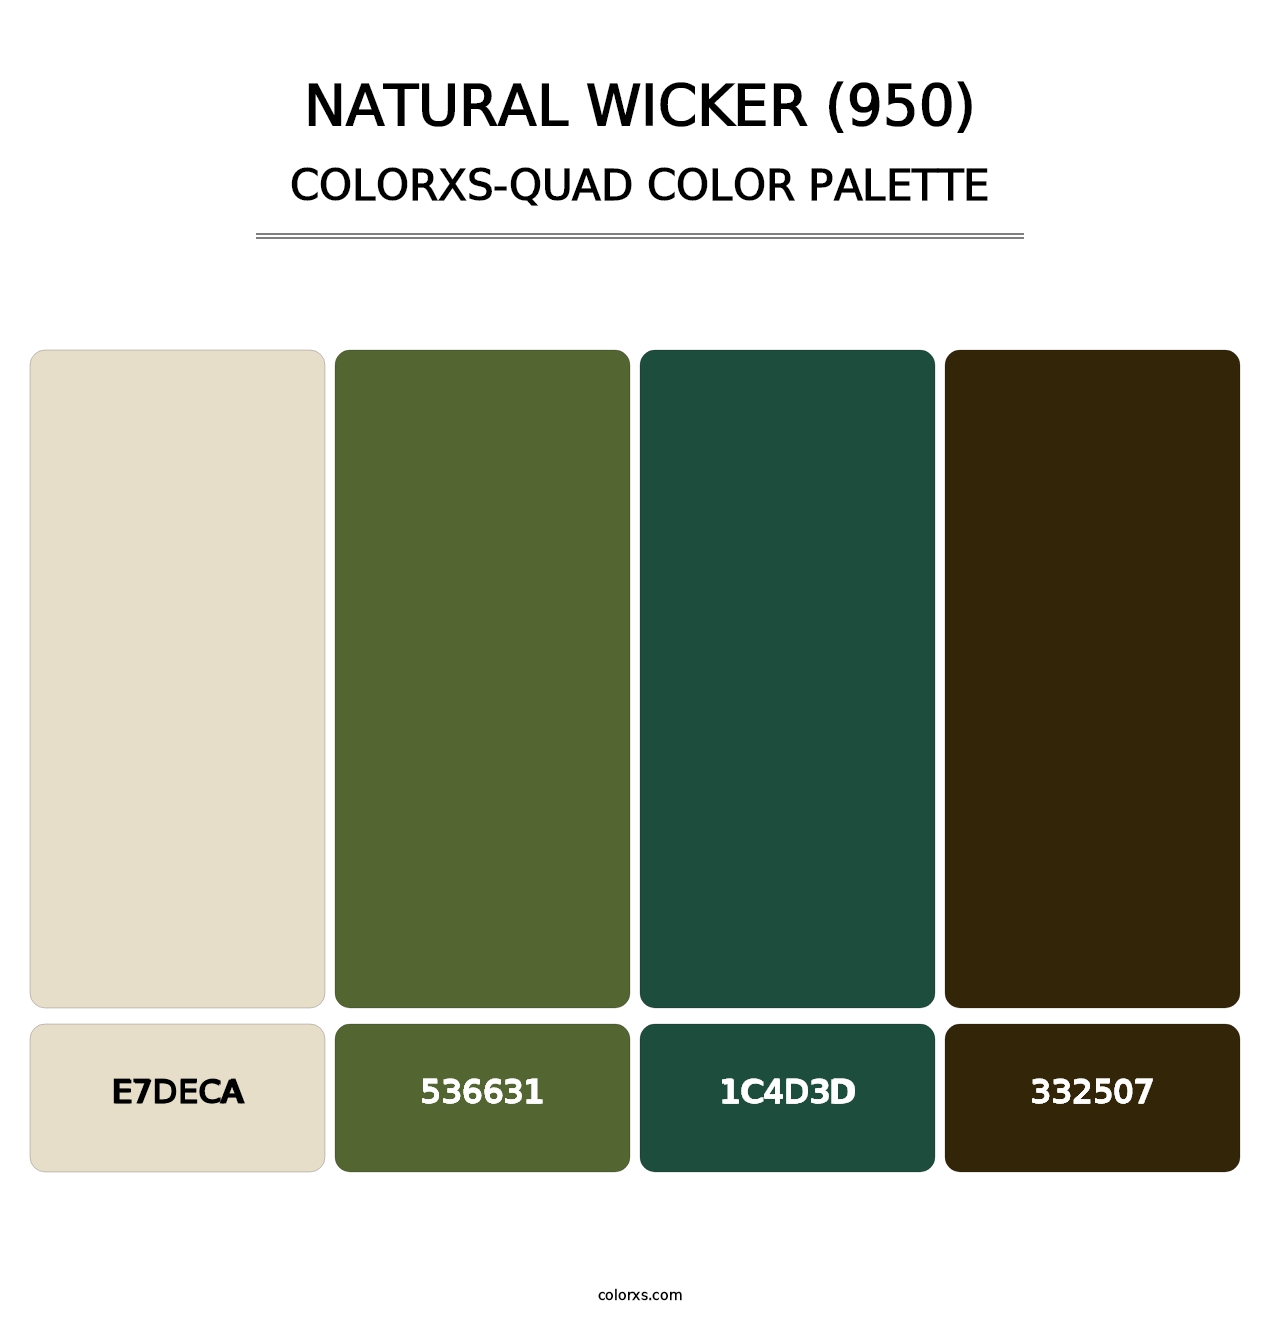 Natural Wicker (950) - Colorxs Quad Palette